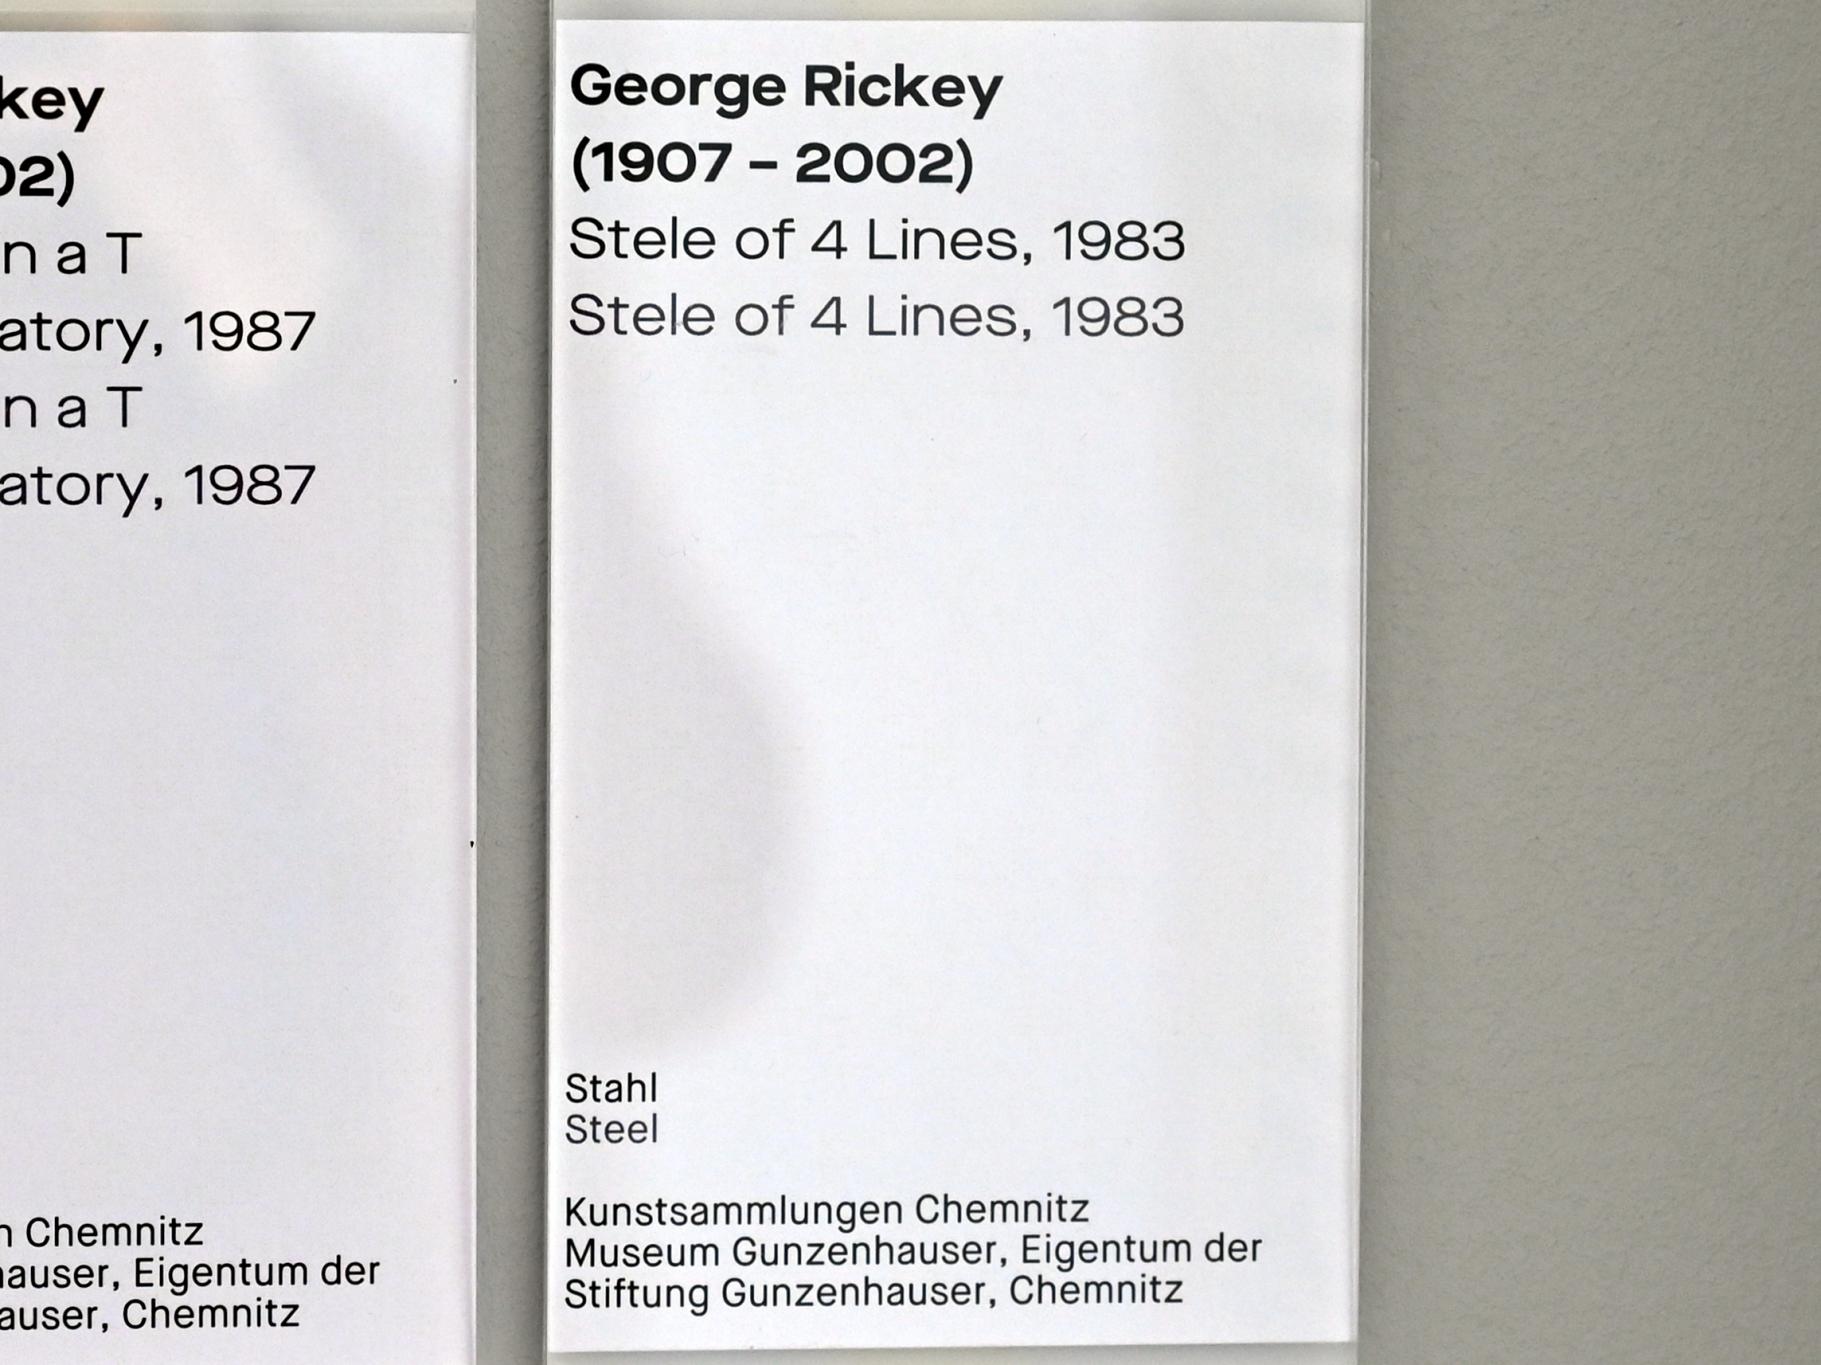 George Rickey: Stele of 4 Lines, 1983, Bild 2/2